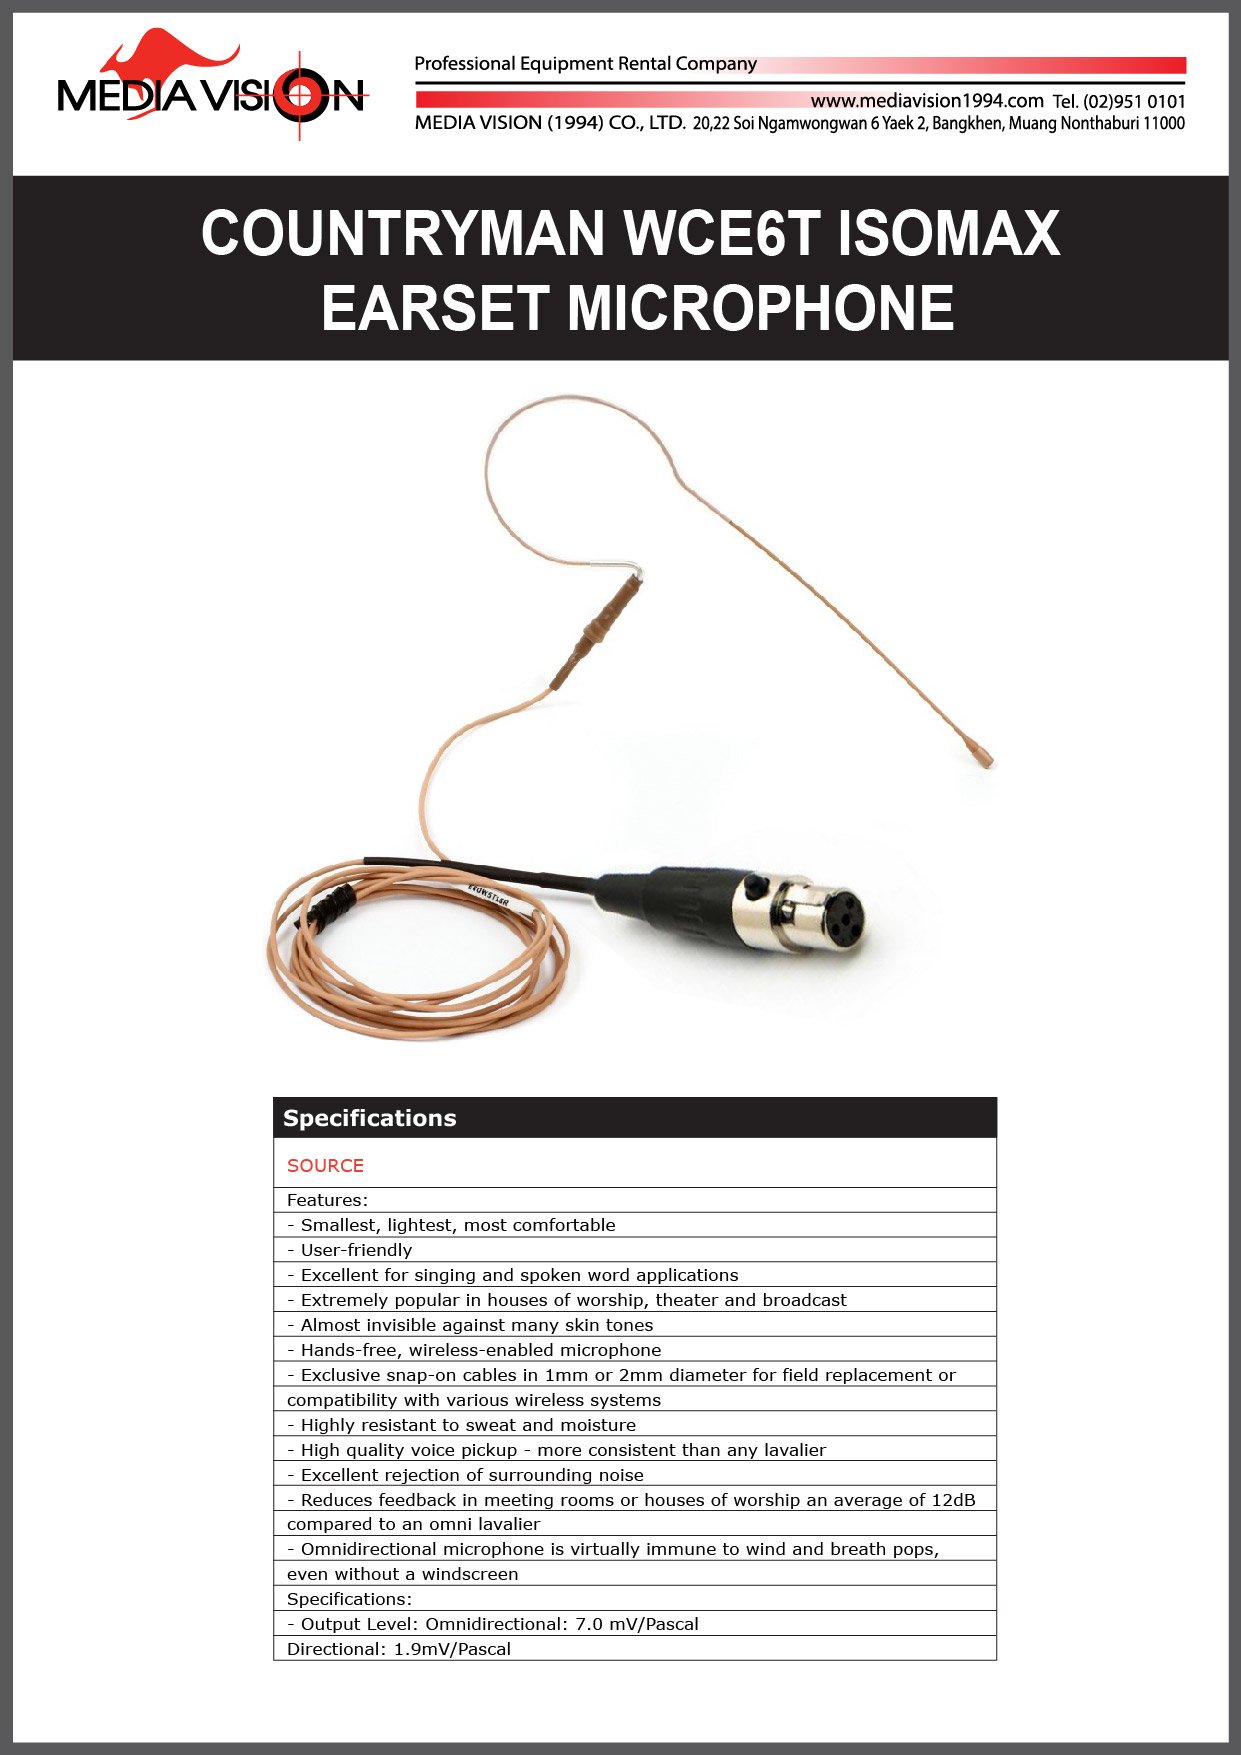 COUNTRYMAN WCE6T ISOMAX EARSET MICROPHONE